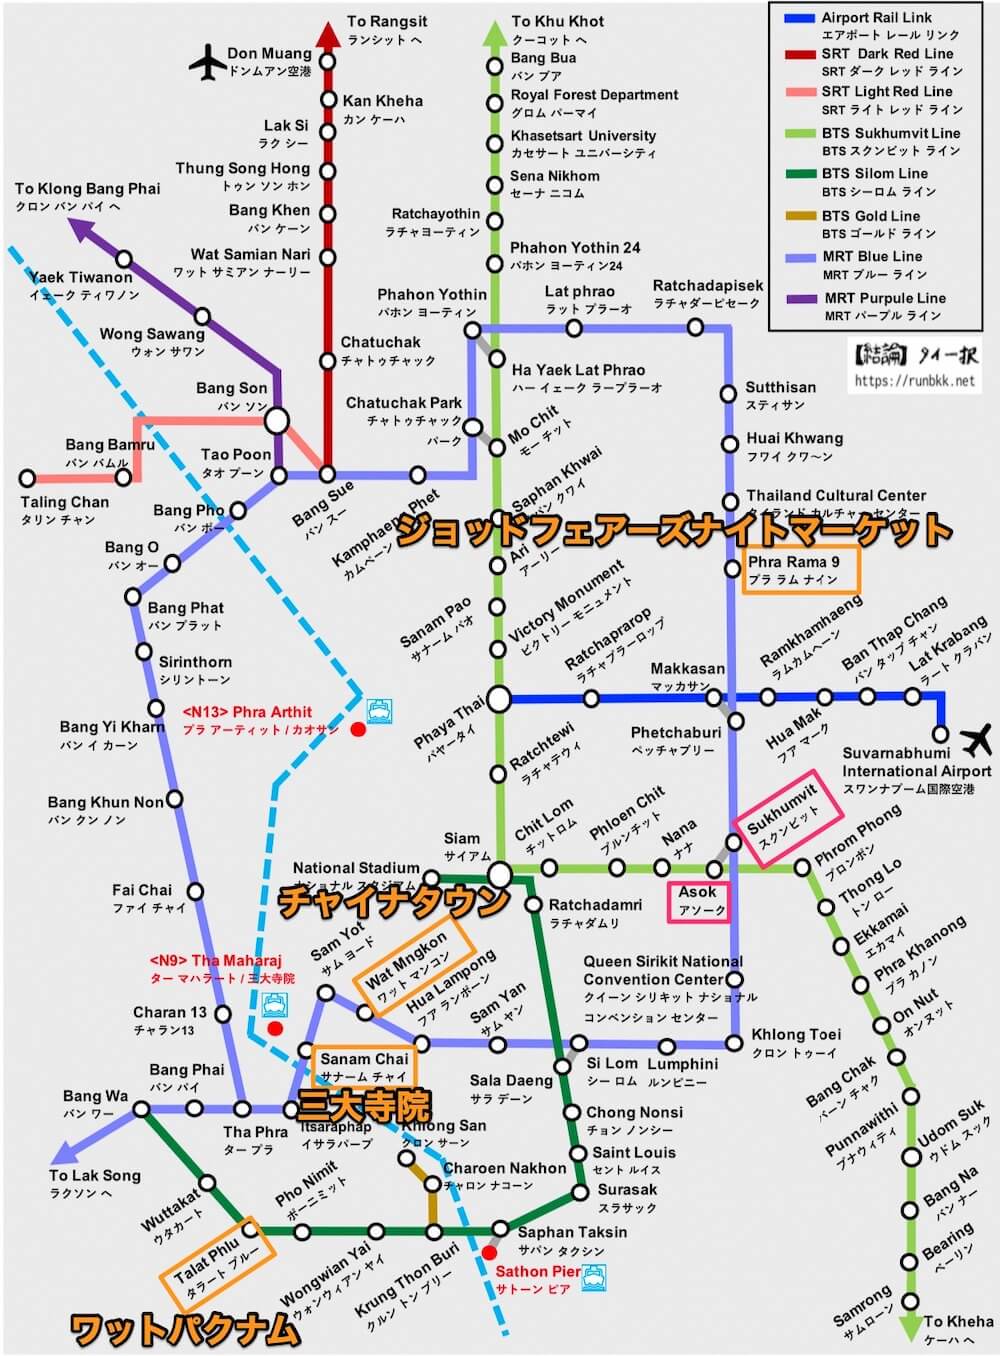 BTSアソークと周辺の観光地を記した路線図